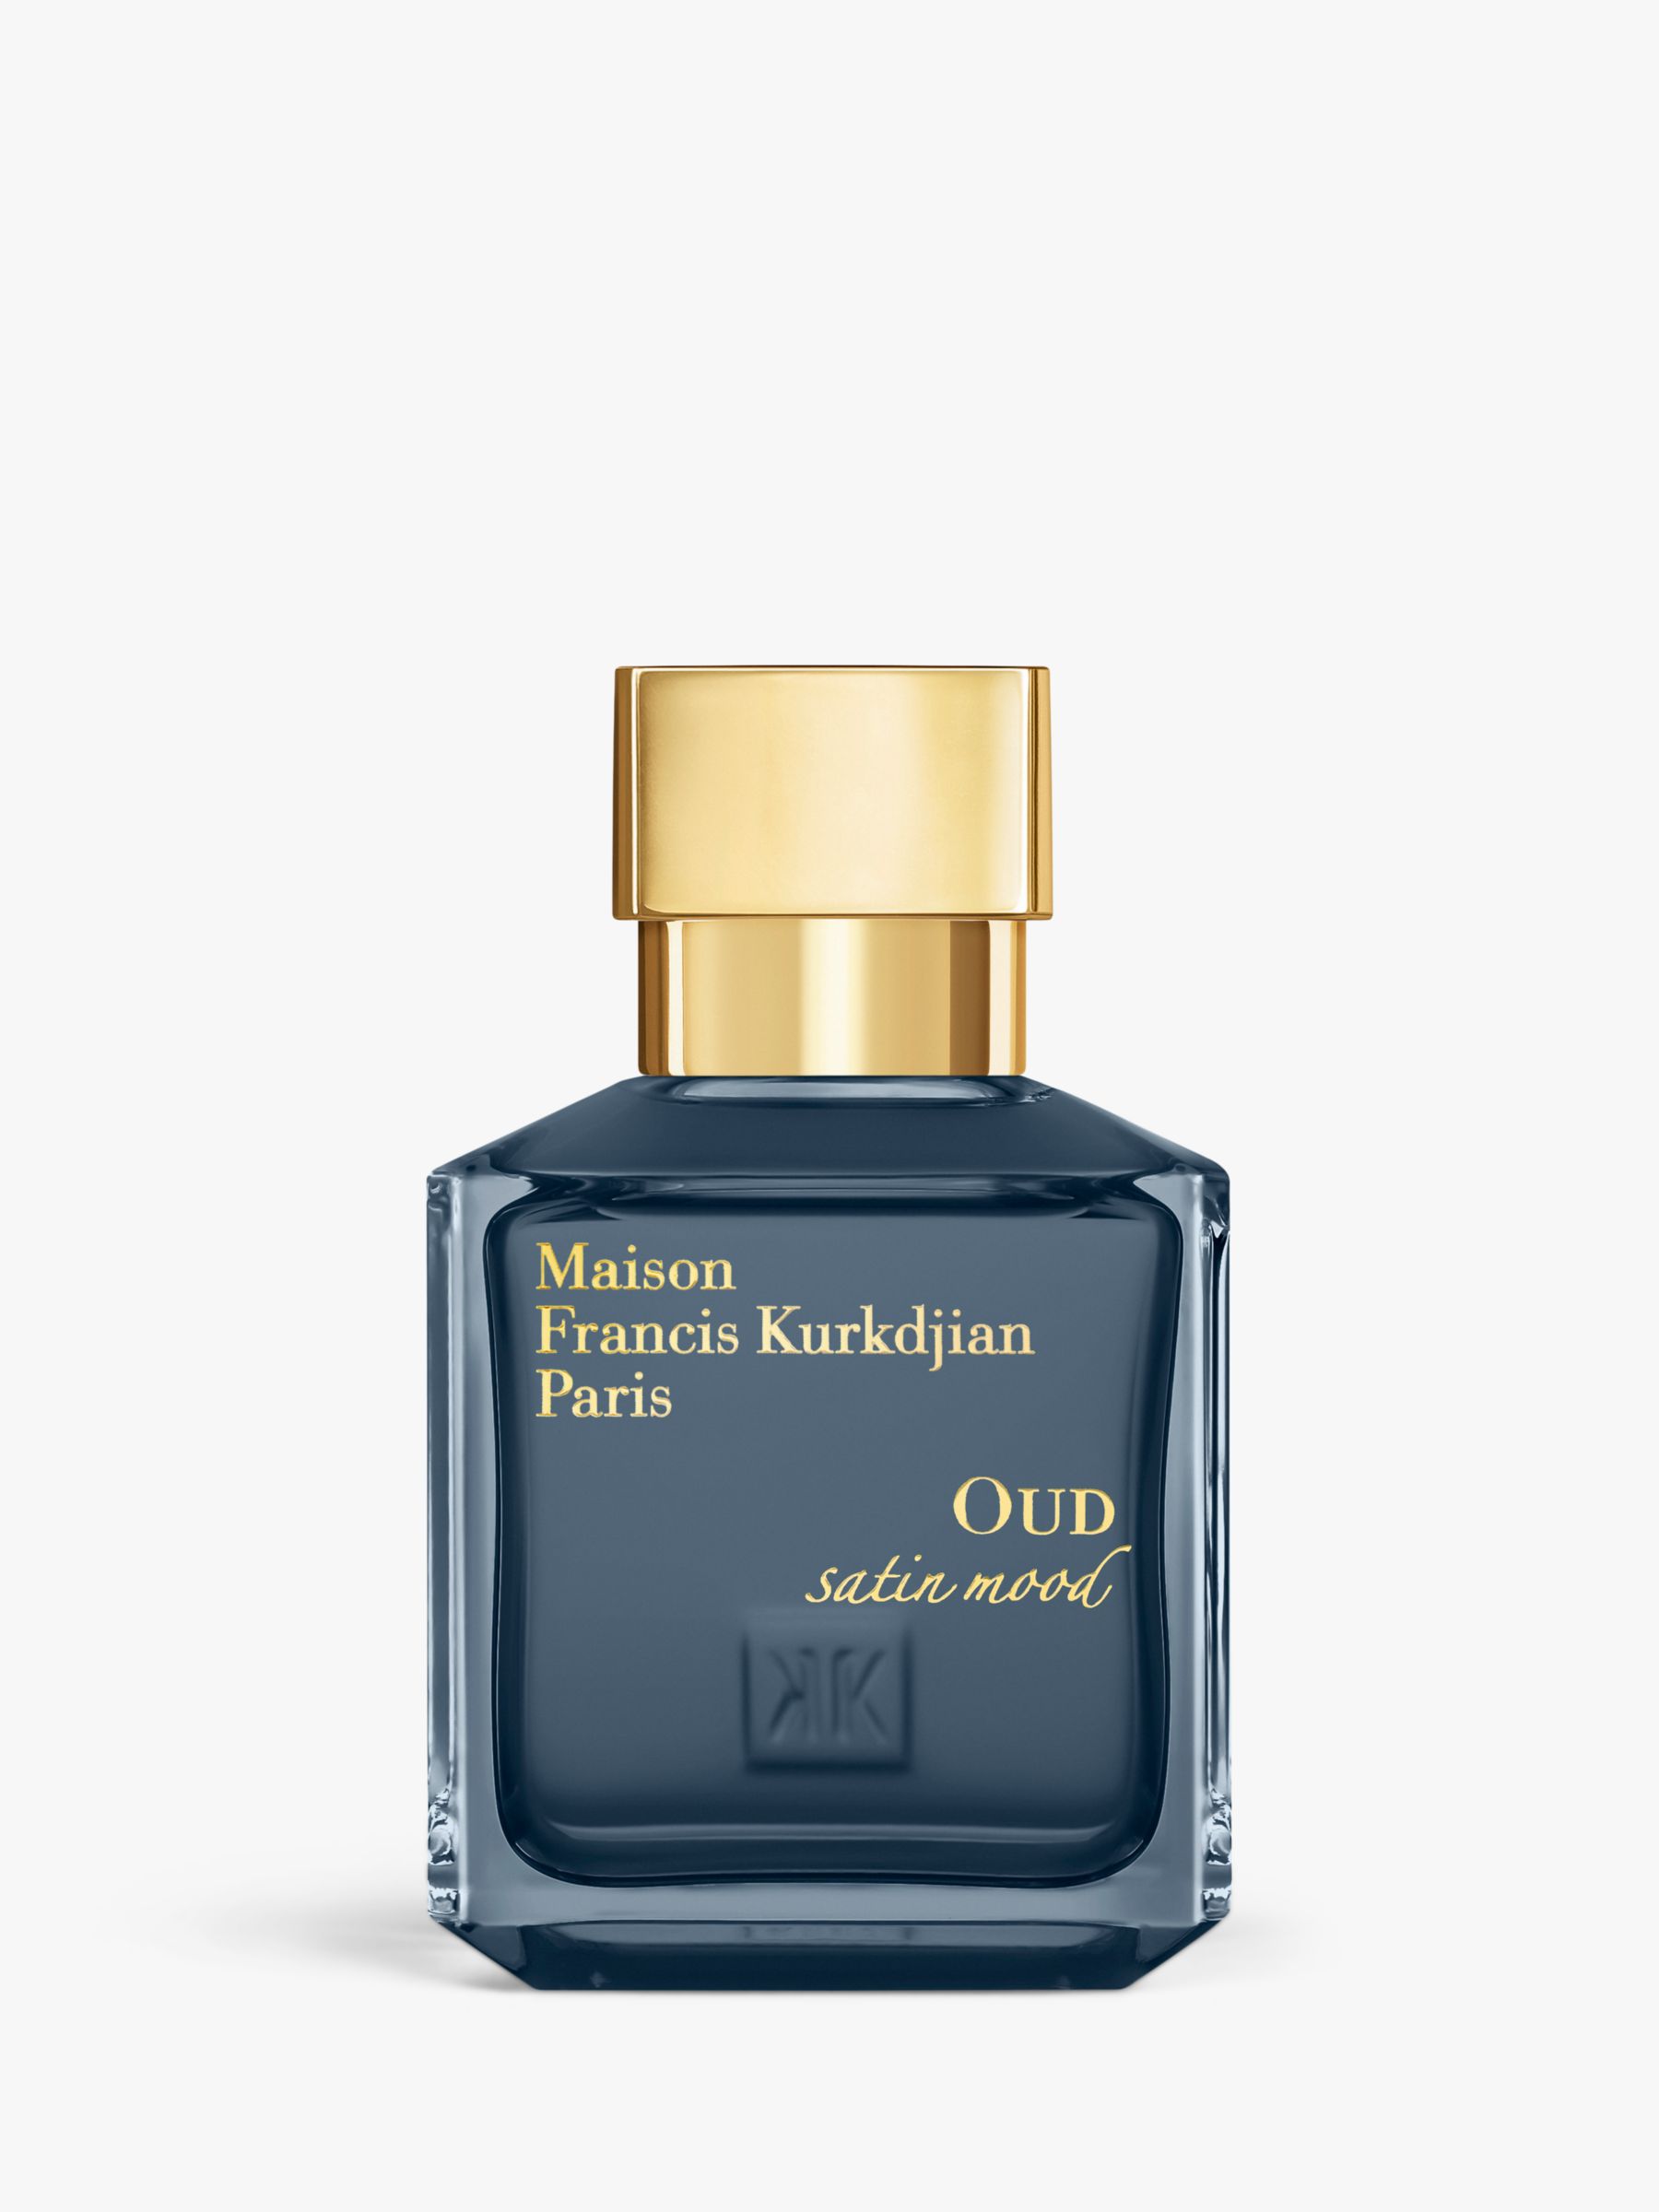 Maison Francis Kurkdjian Oud Satin Mood Eau de Parfum, 70ml 1